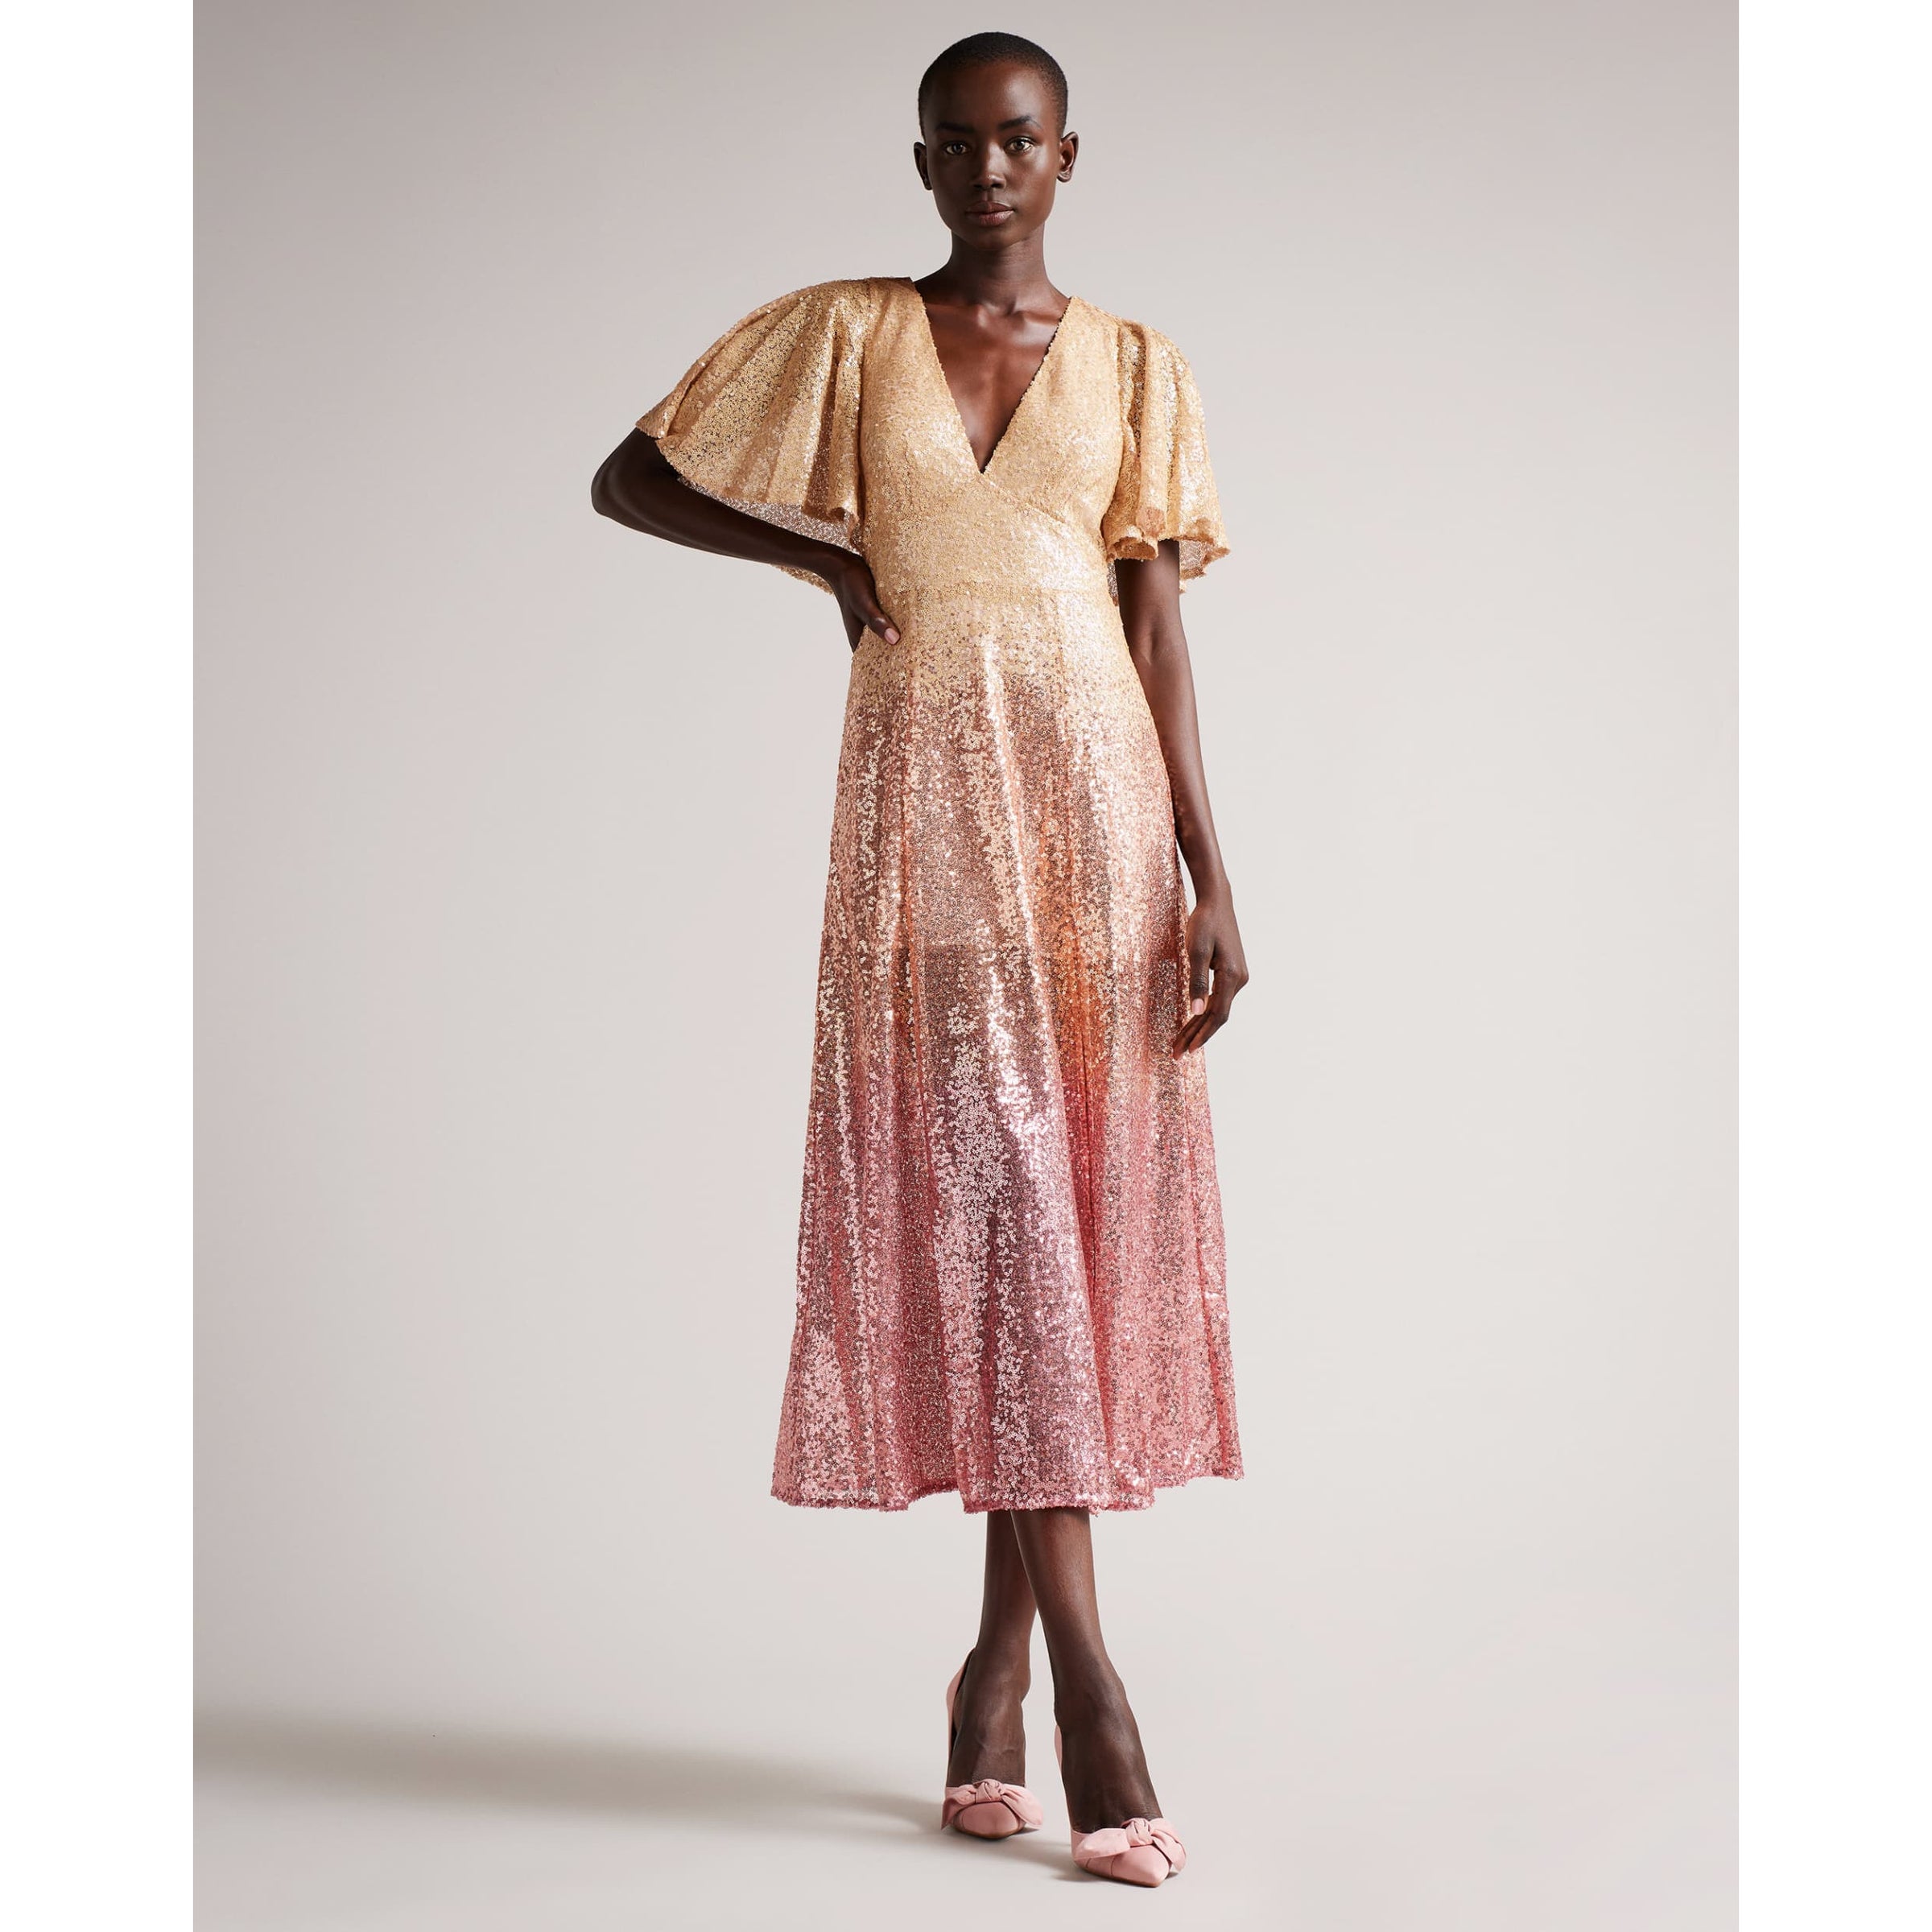 Ted Baker Zadi Dress Review | POPSUGAR Fashion